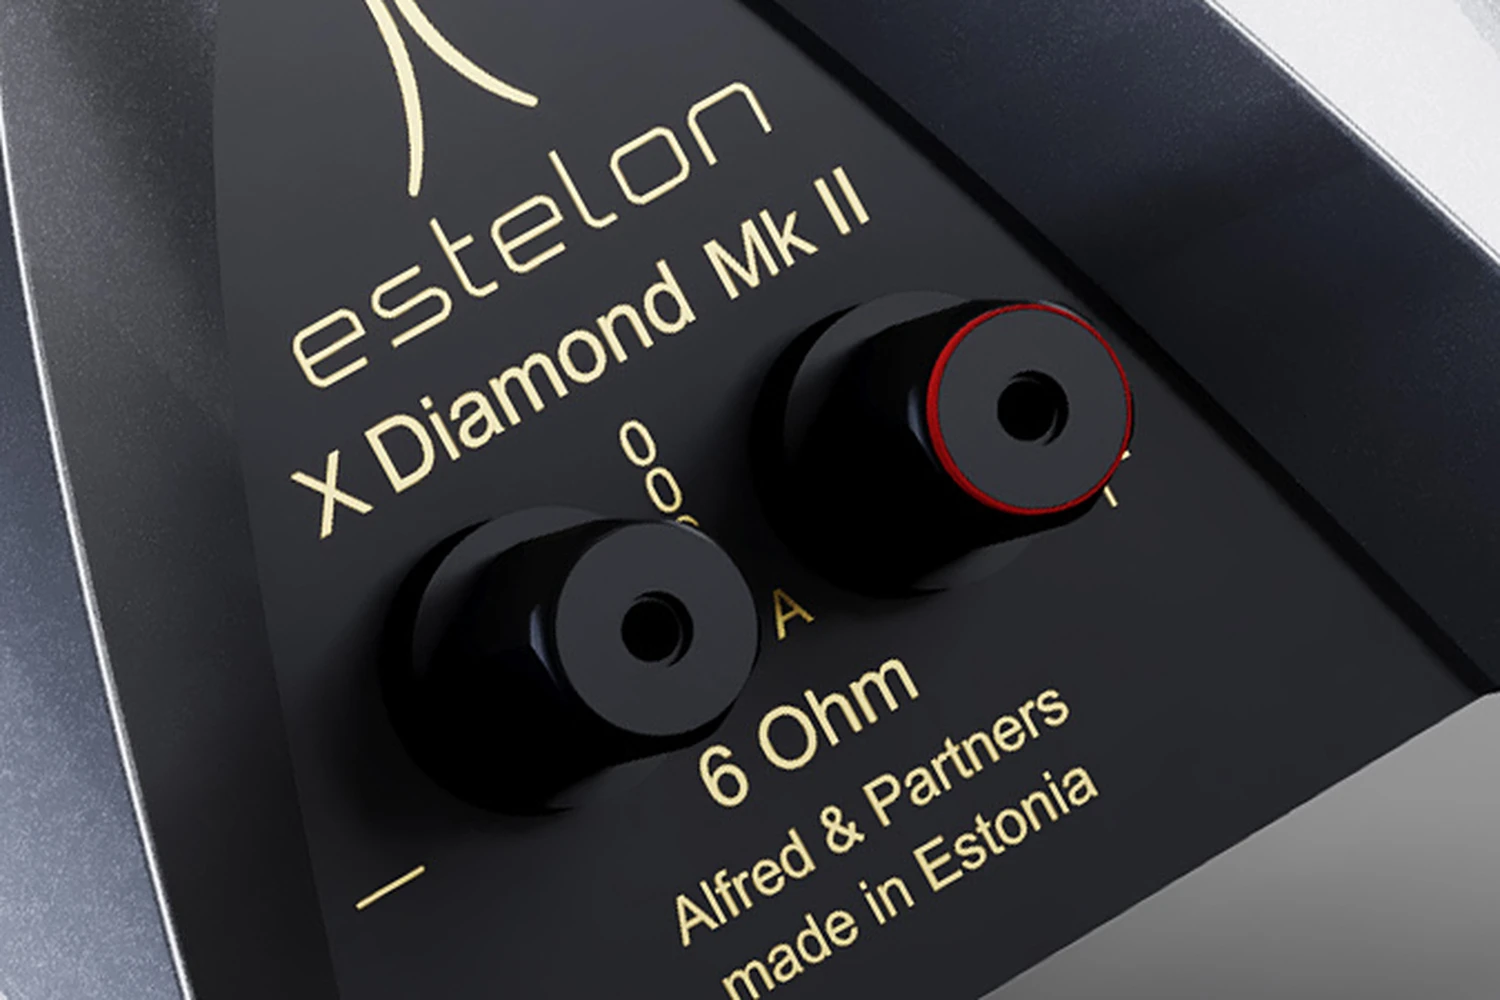 Borniers de l'Estelon X Diamond MK II dans l'article de SoundStage ULTRA